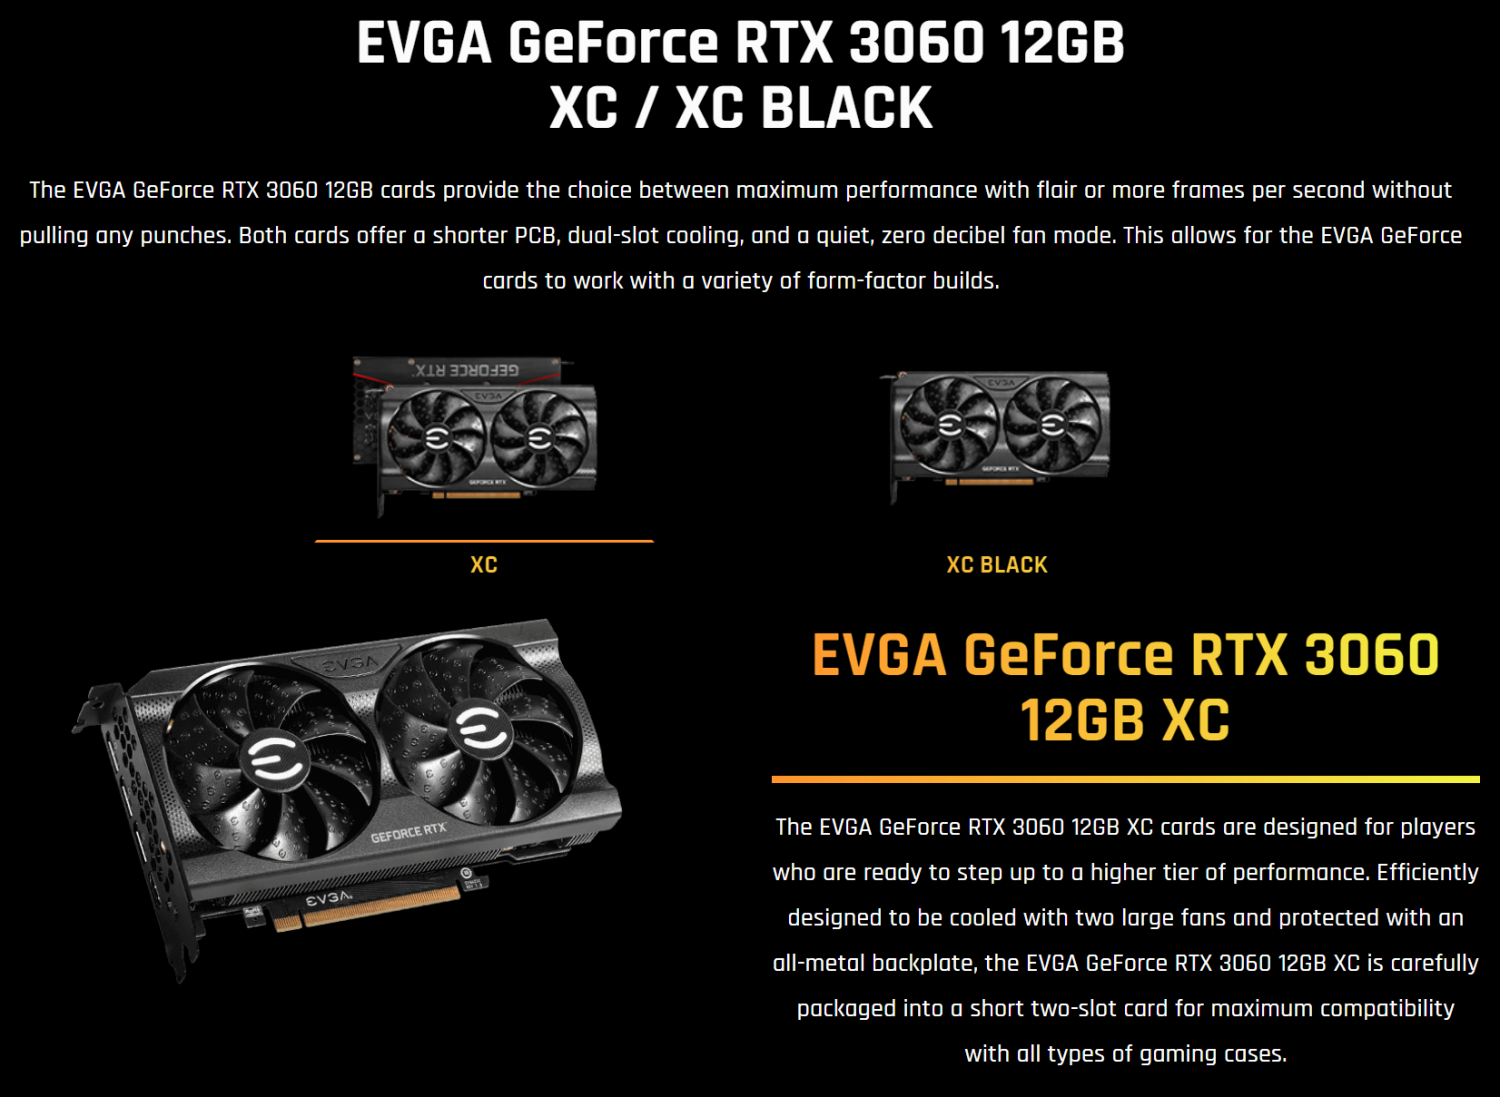 EVGA RTX 3060 XC Black Review - IGN